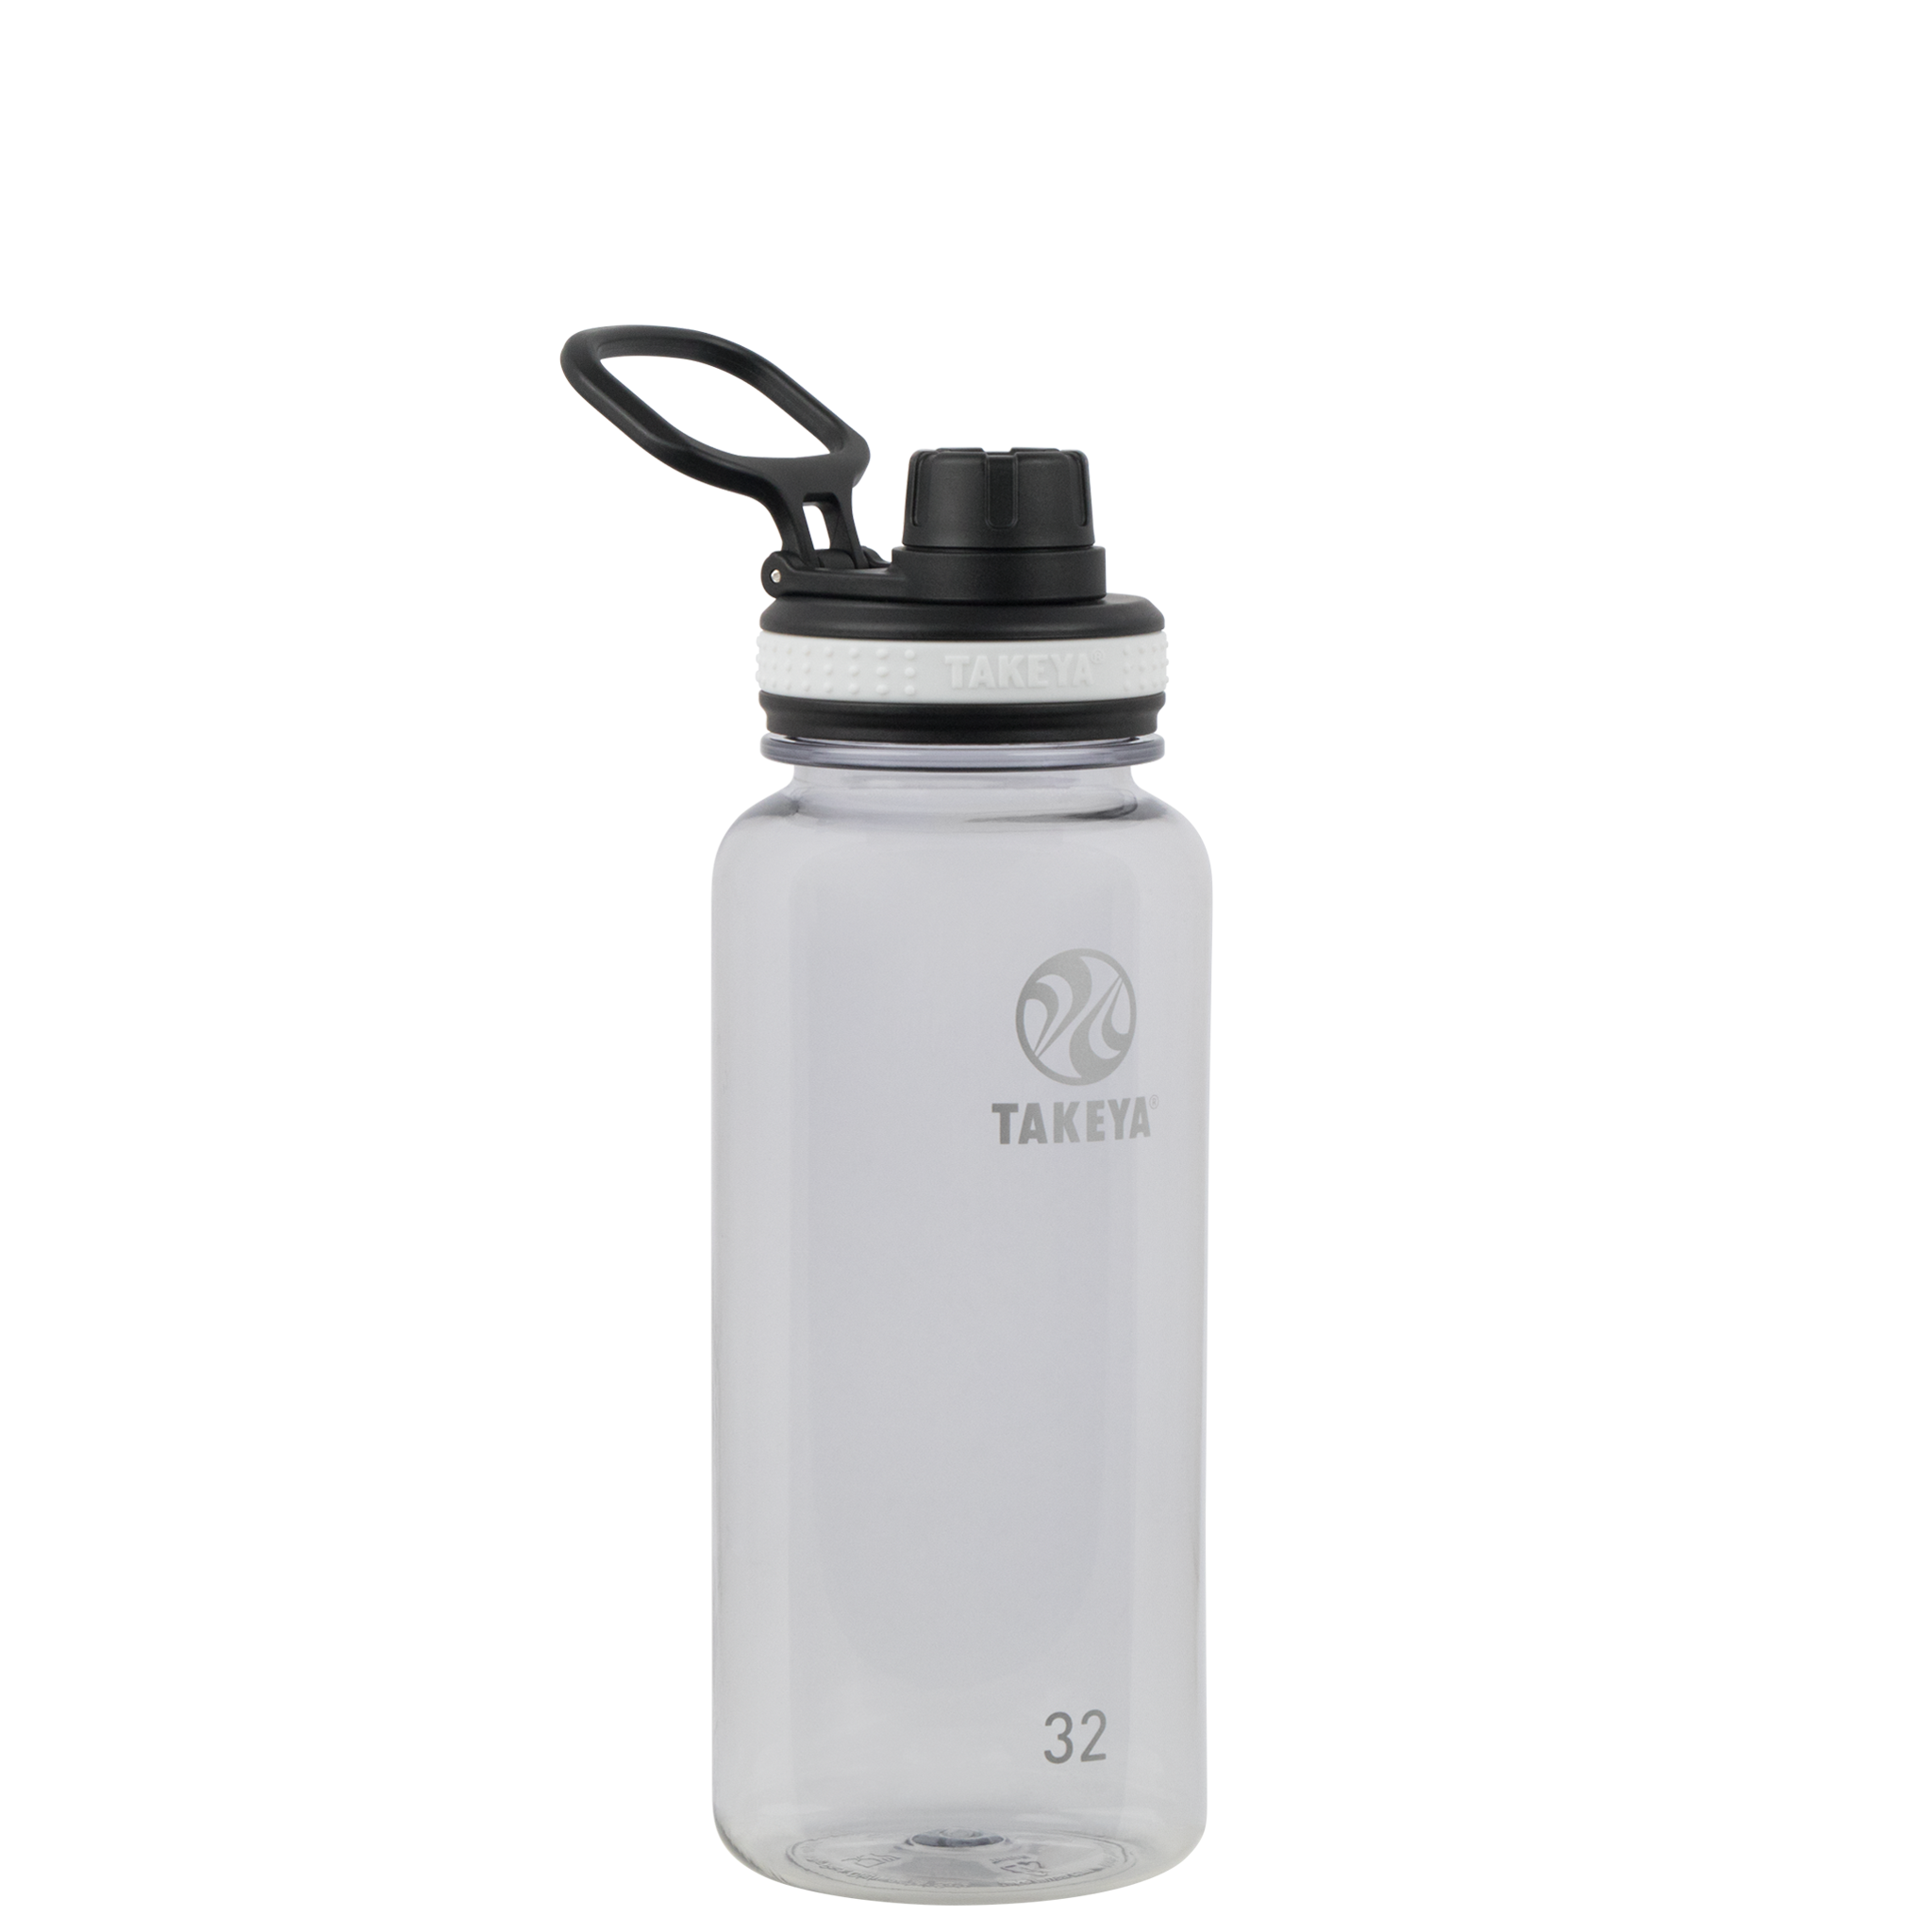 New Best Quality Transparent Glass Bottle Frost Perfume Custom